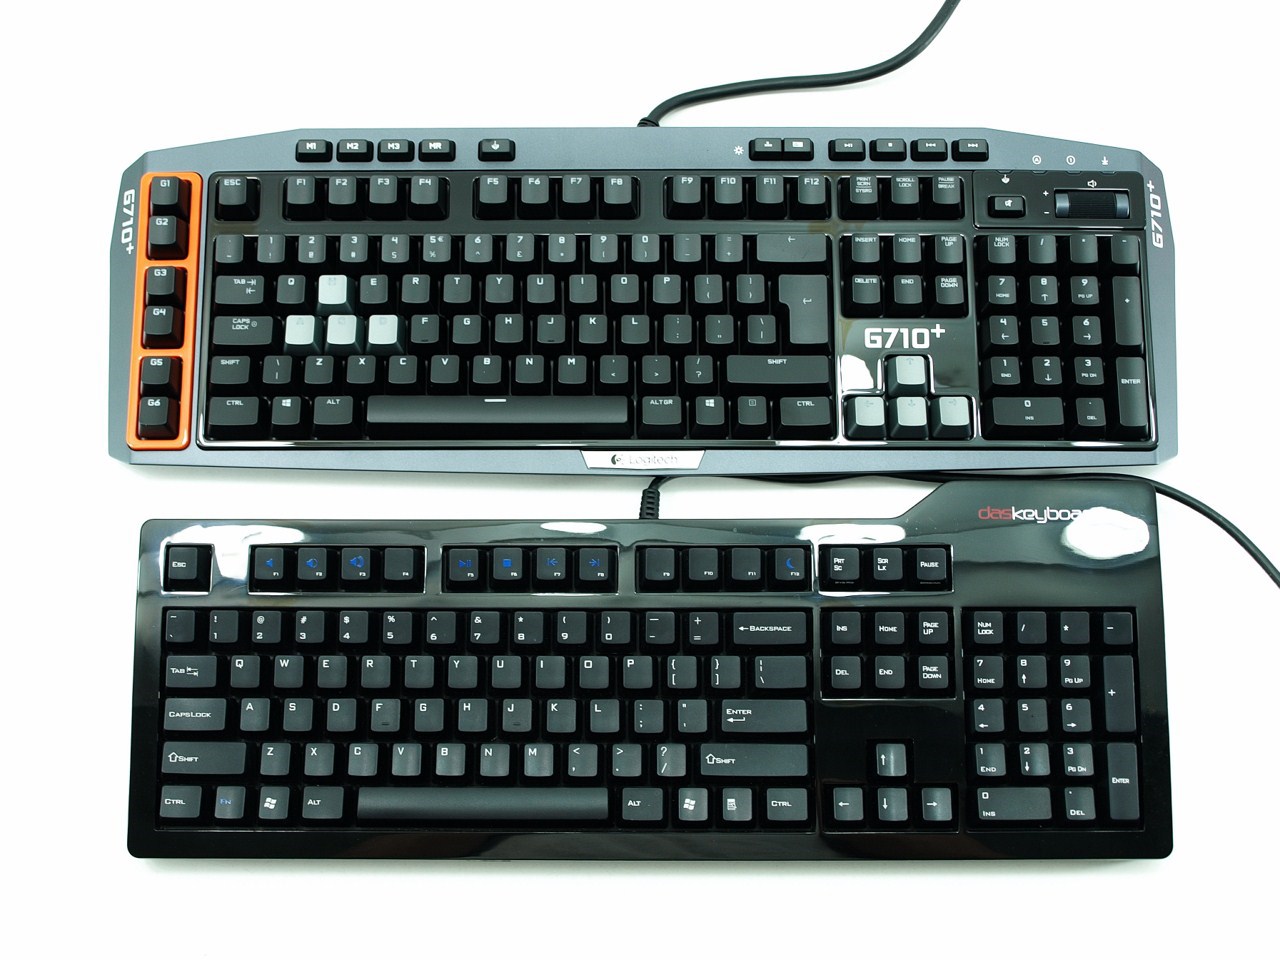 Dare Integrere Velsigne Logitech G710+ Mechanical Gaming Keyboard Review